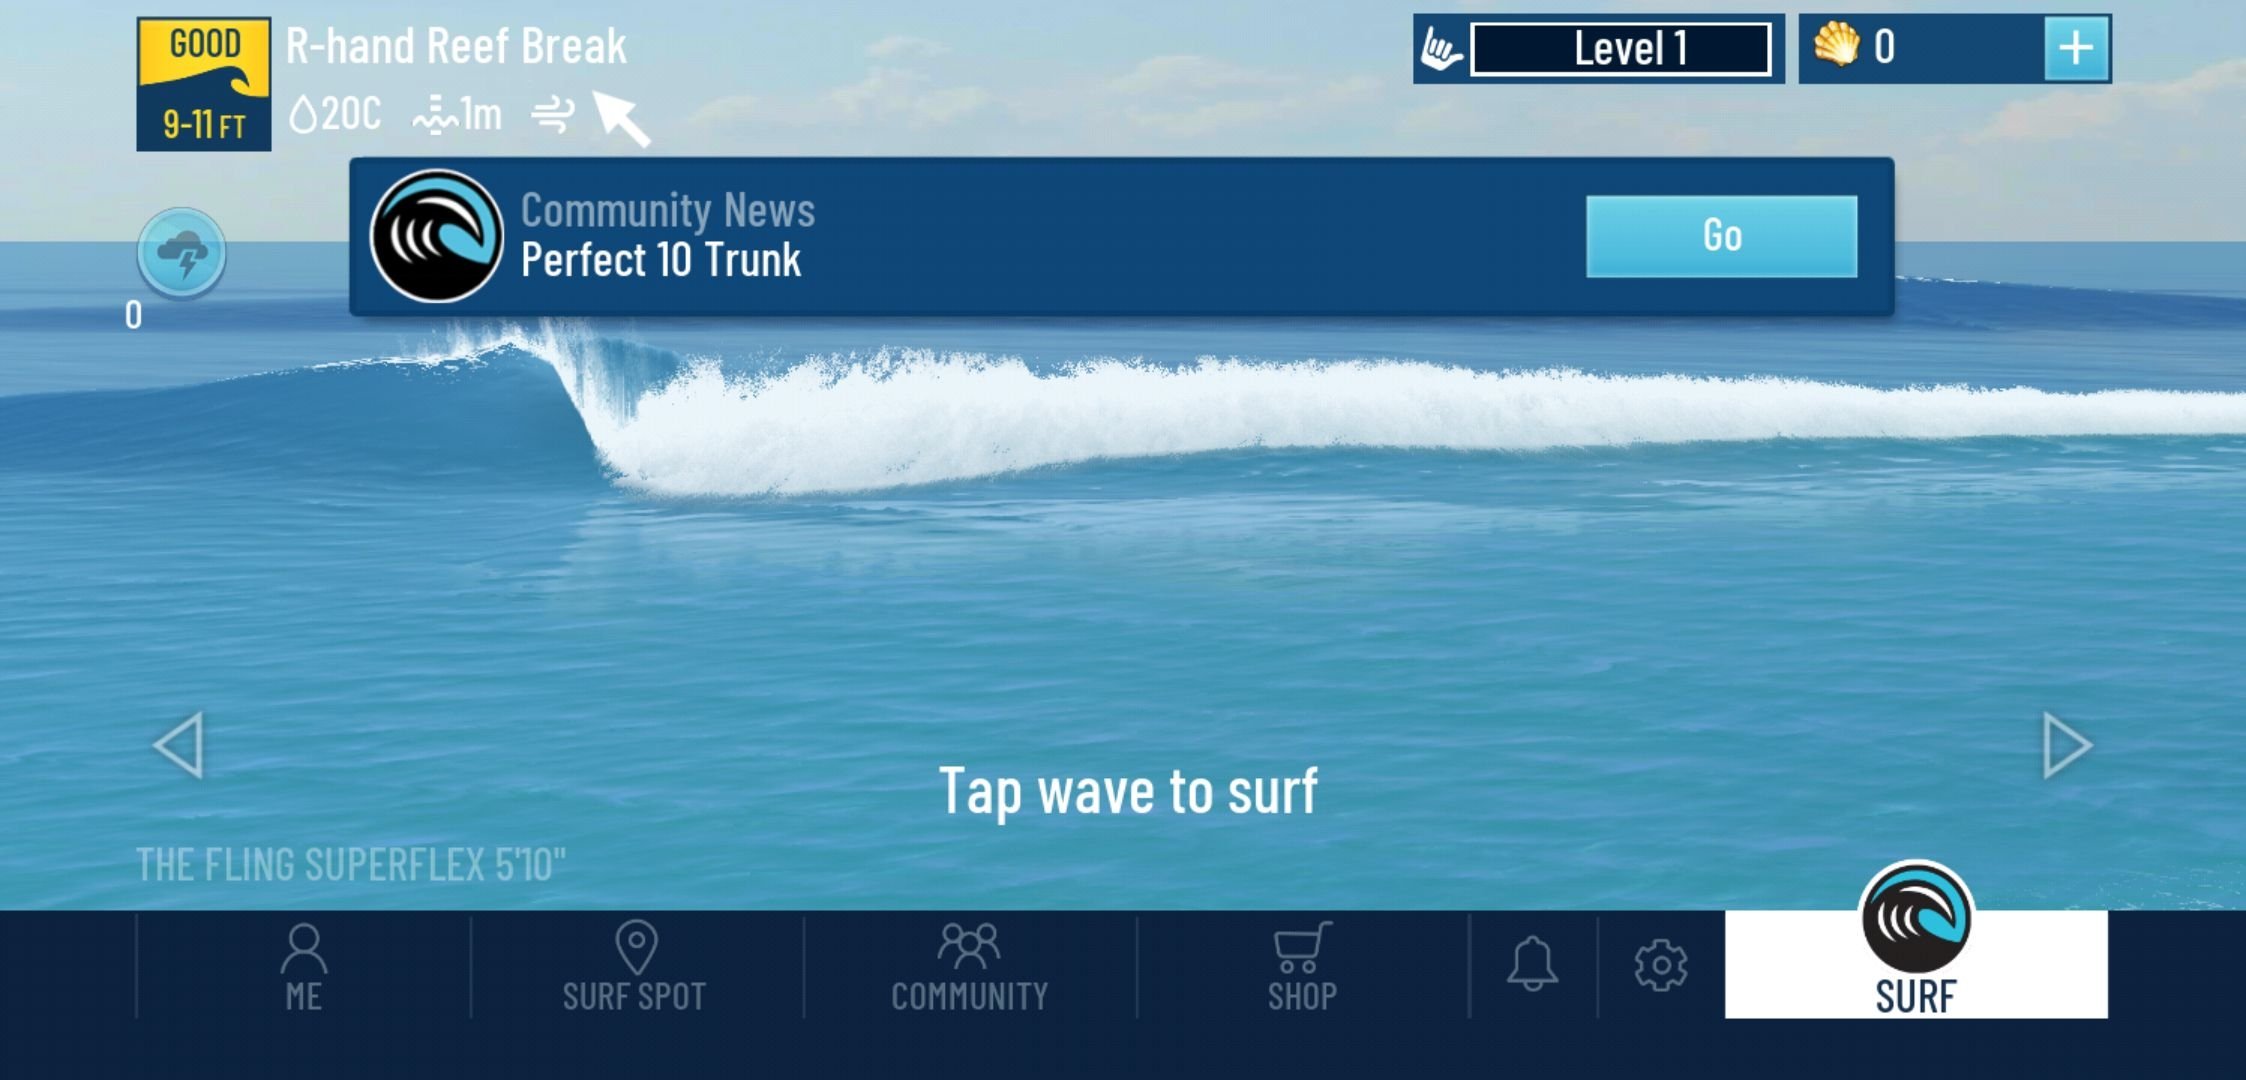 True Surf - Apps on Google Play